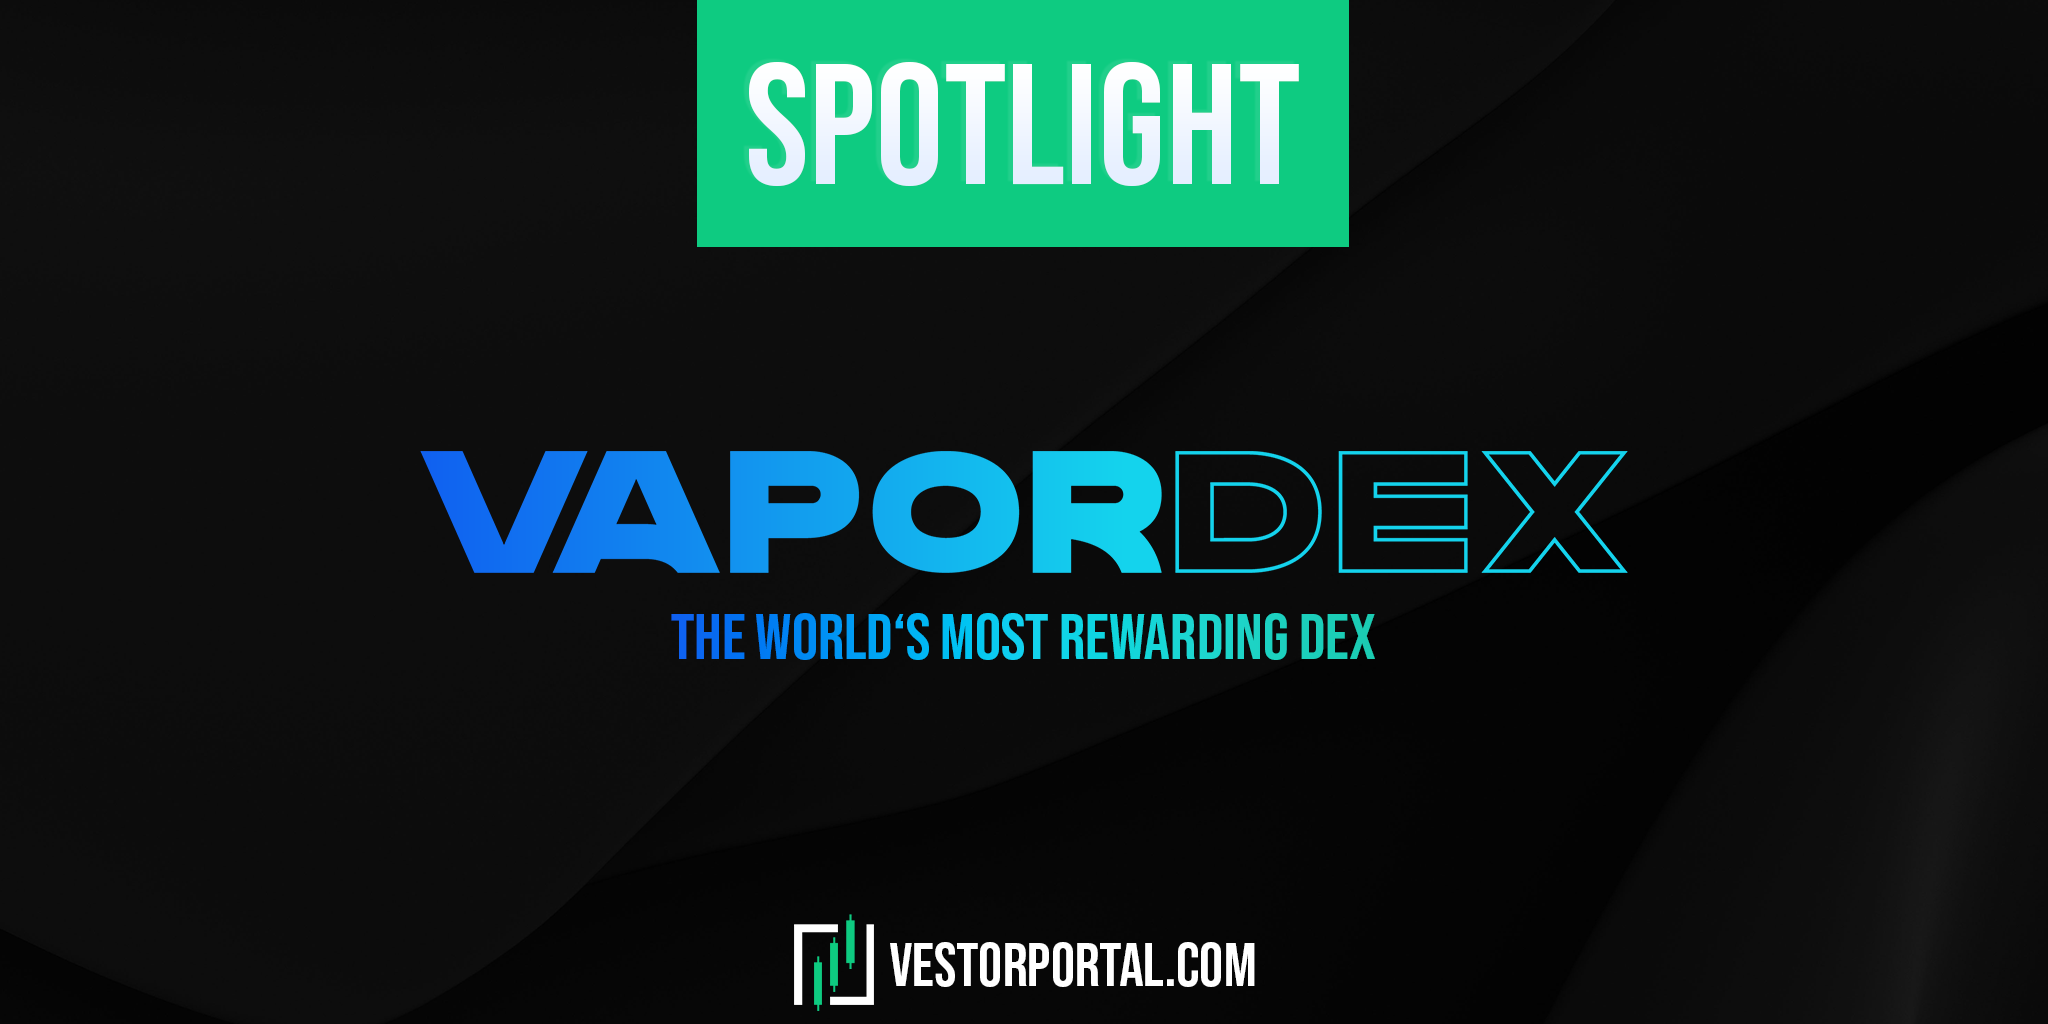 VaporDEX - The World's Most Rewarding DEX